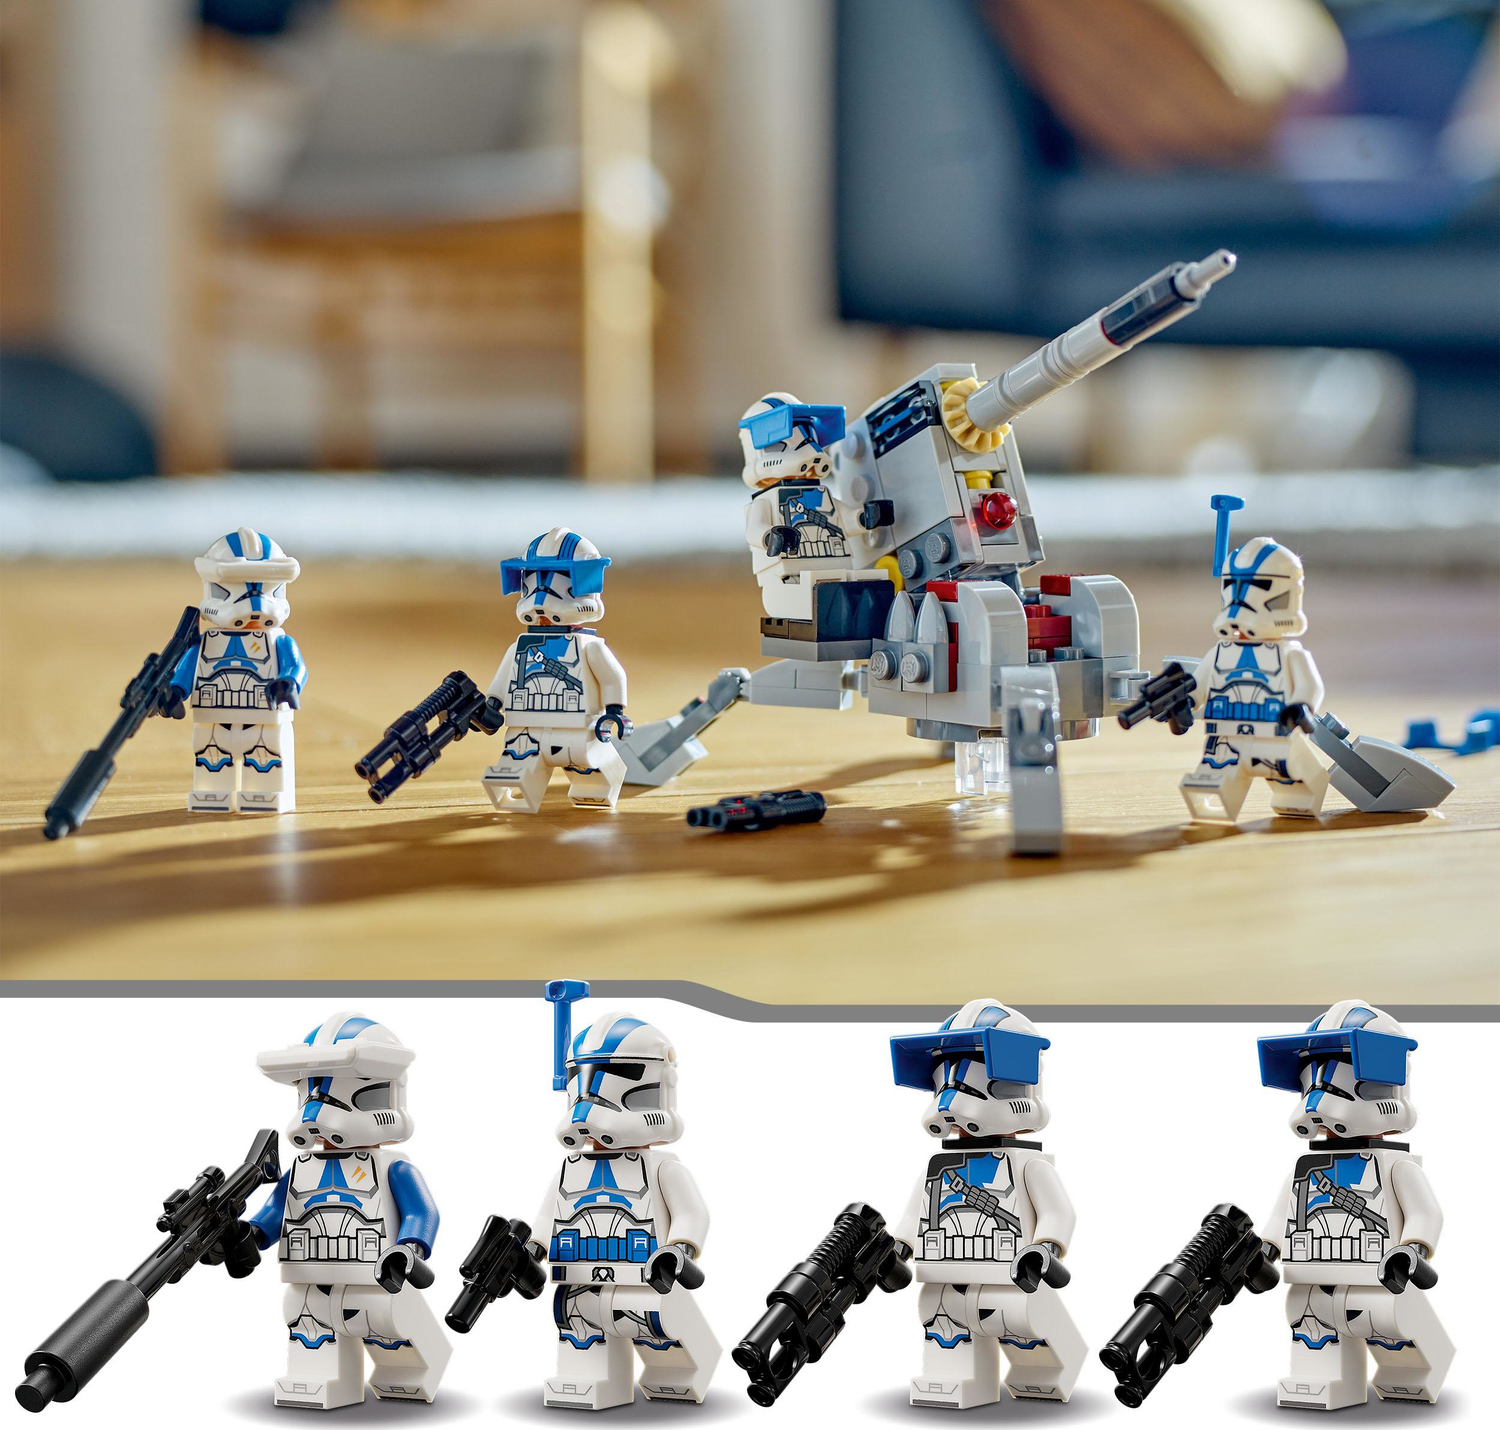 LEGO Star Wars 501st Clone Trooper Battle The Village Toy Store